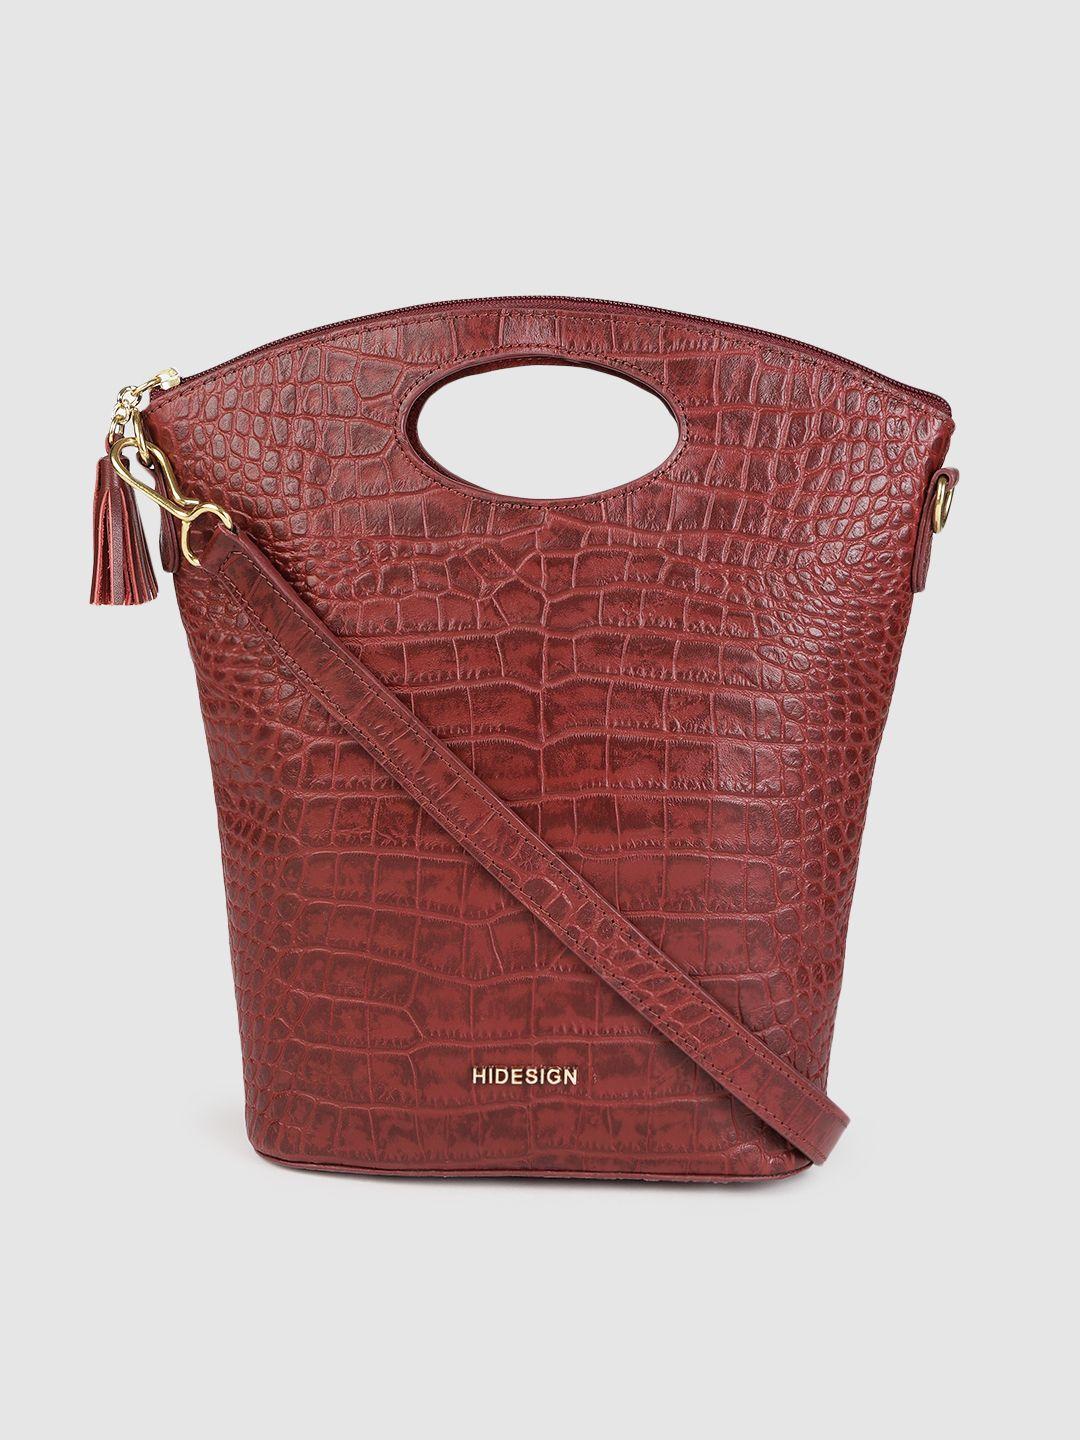 hidesign maroon animal textured leather structured handheld bag